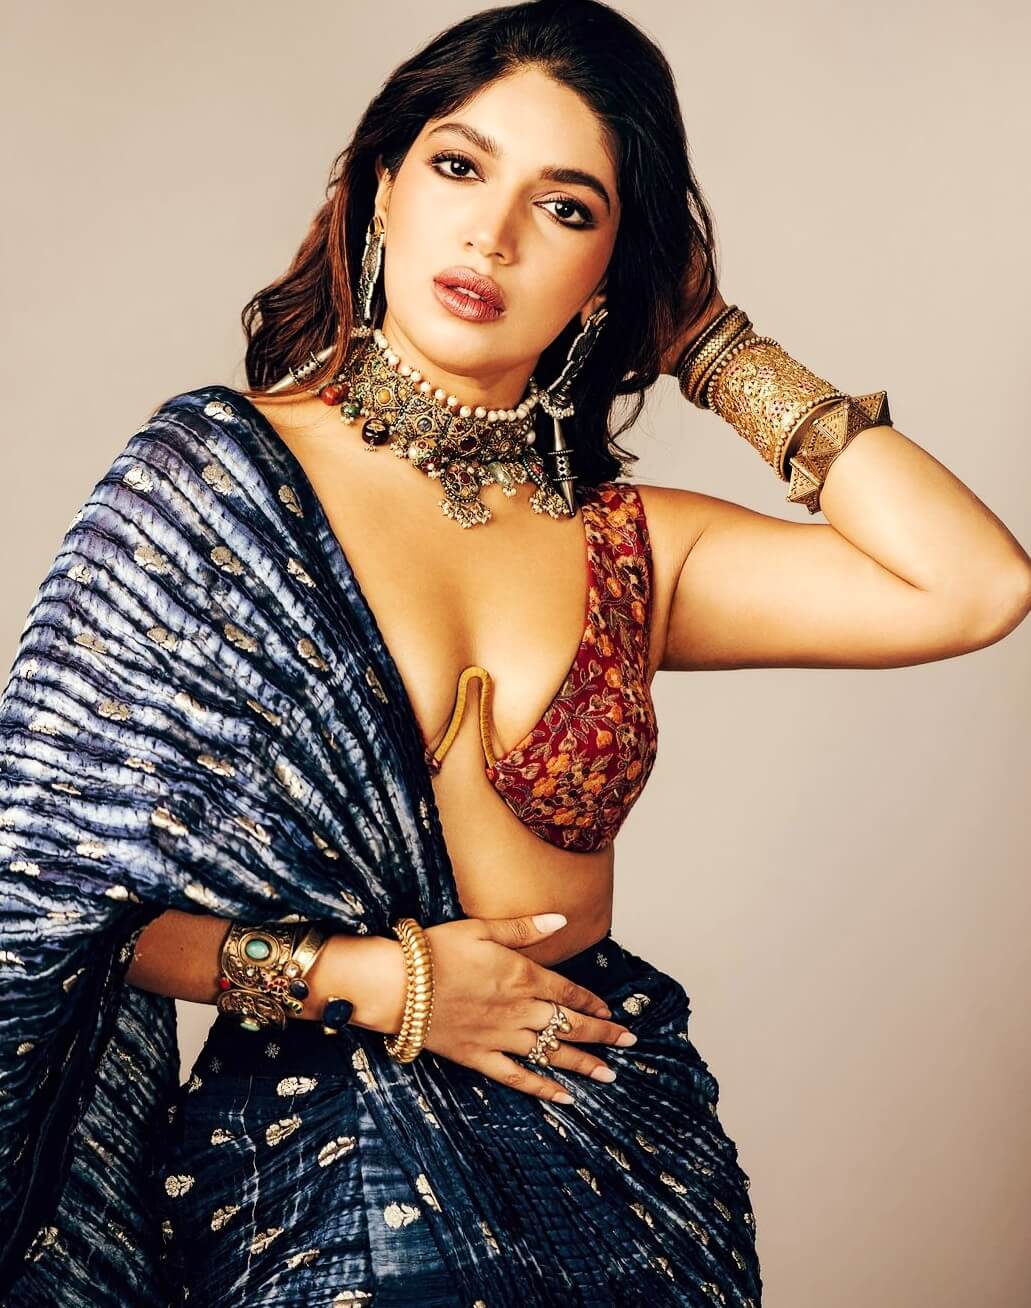 bhumi pednekar sexy look in braless bralette showing her breast